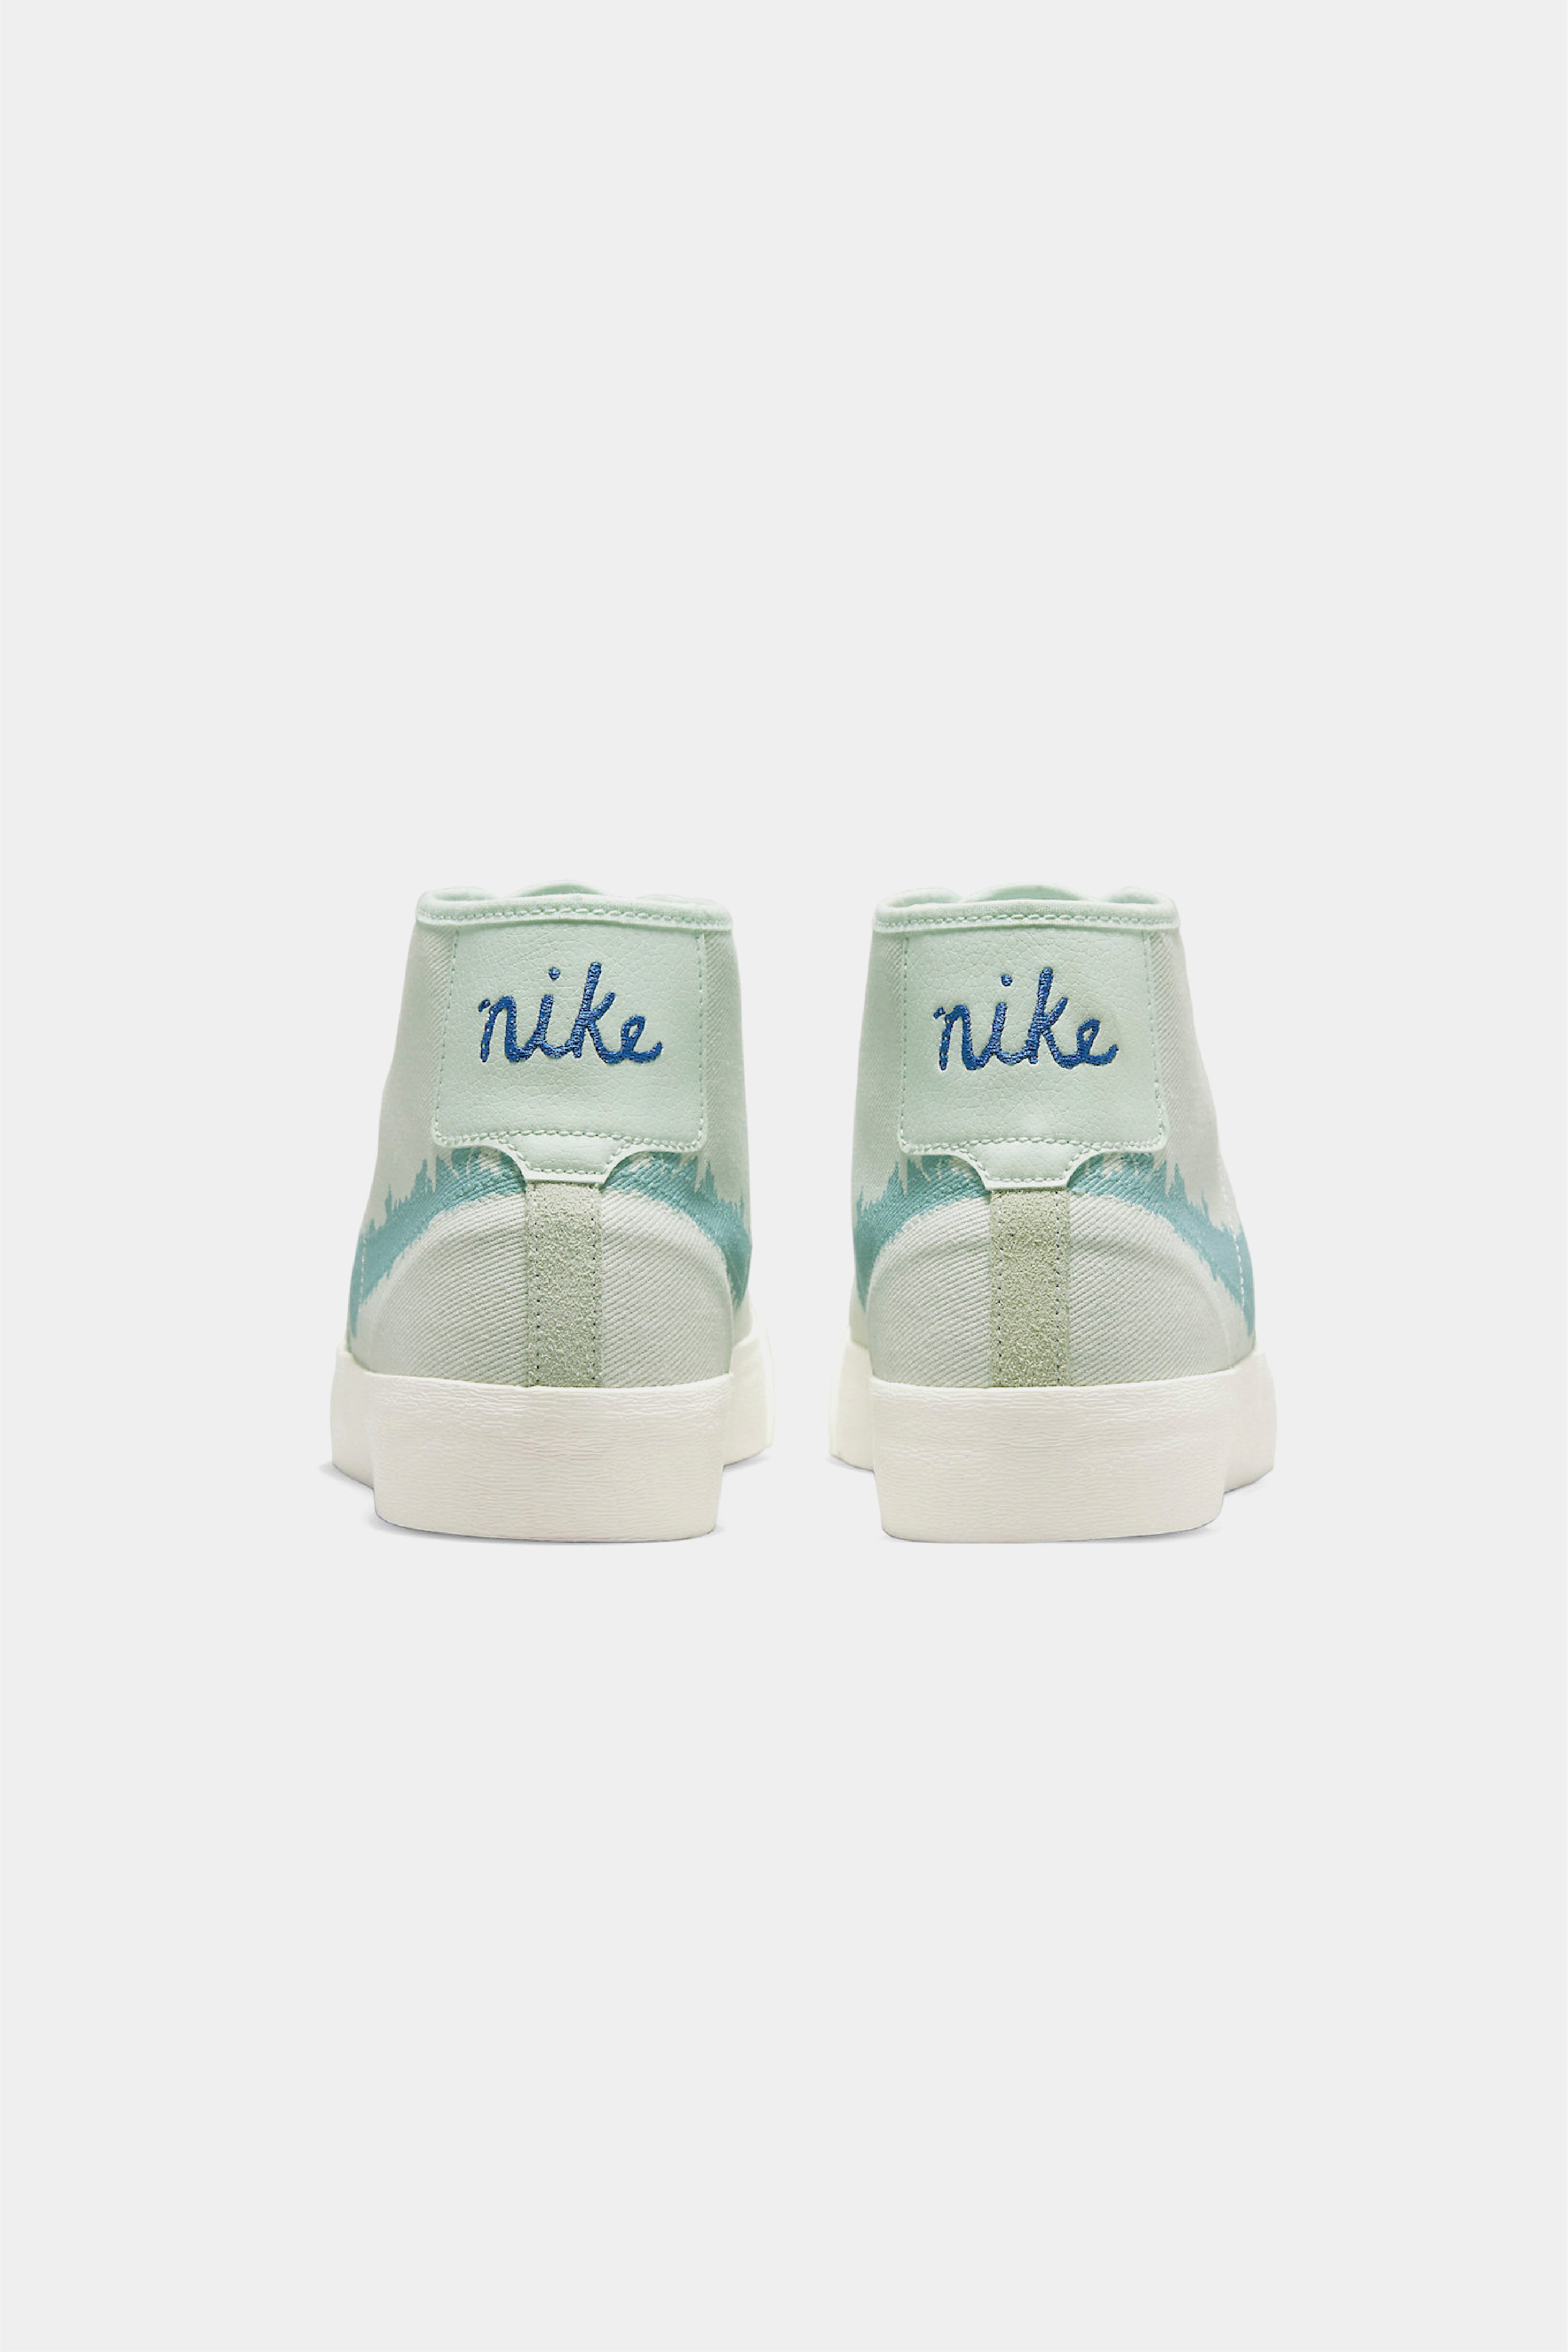 Selectshop FRAME - NIKE SB Nike SB Blazer Court Mid Premium "Barely Green" Footwear Dubai